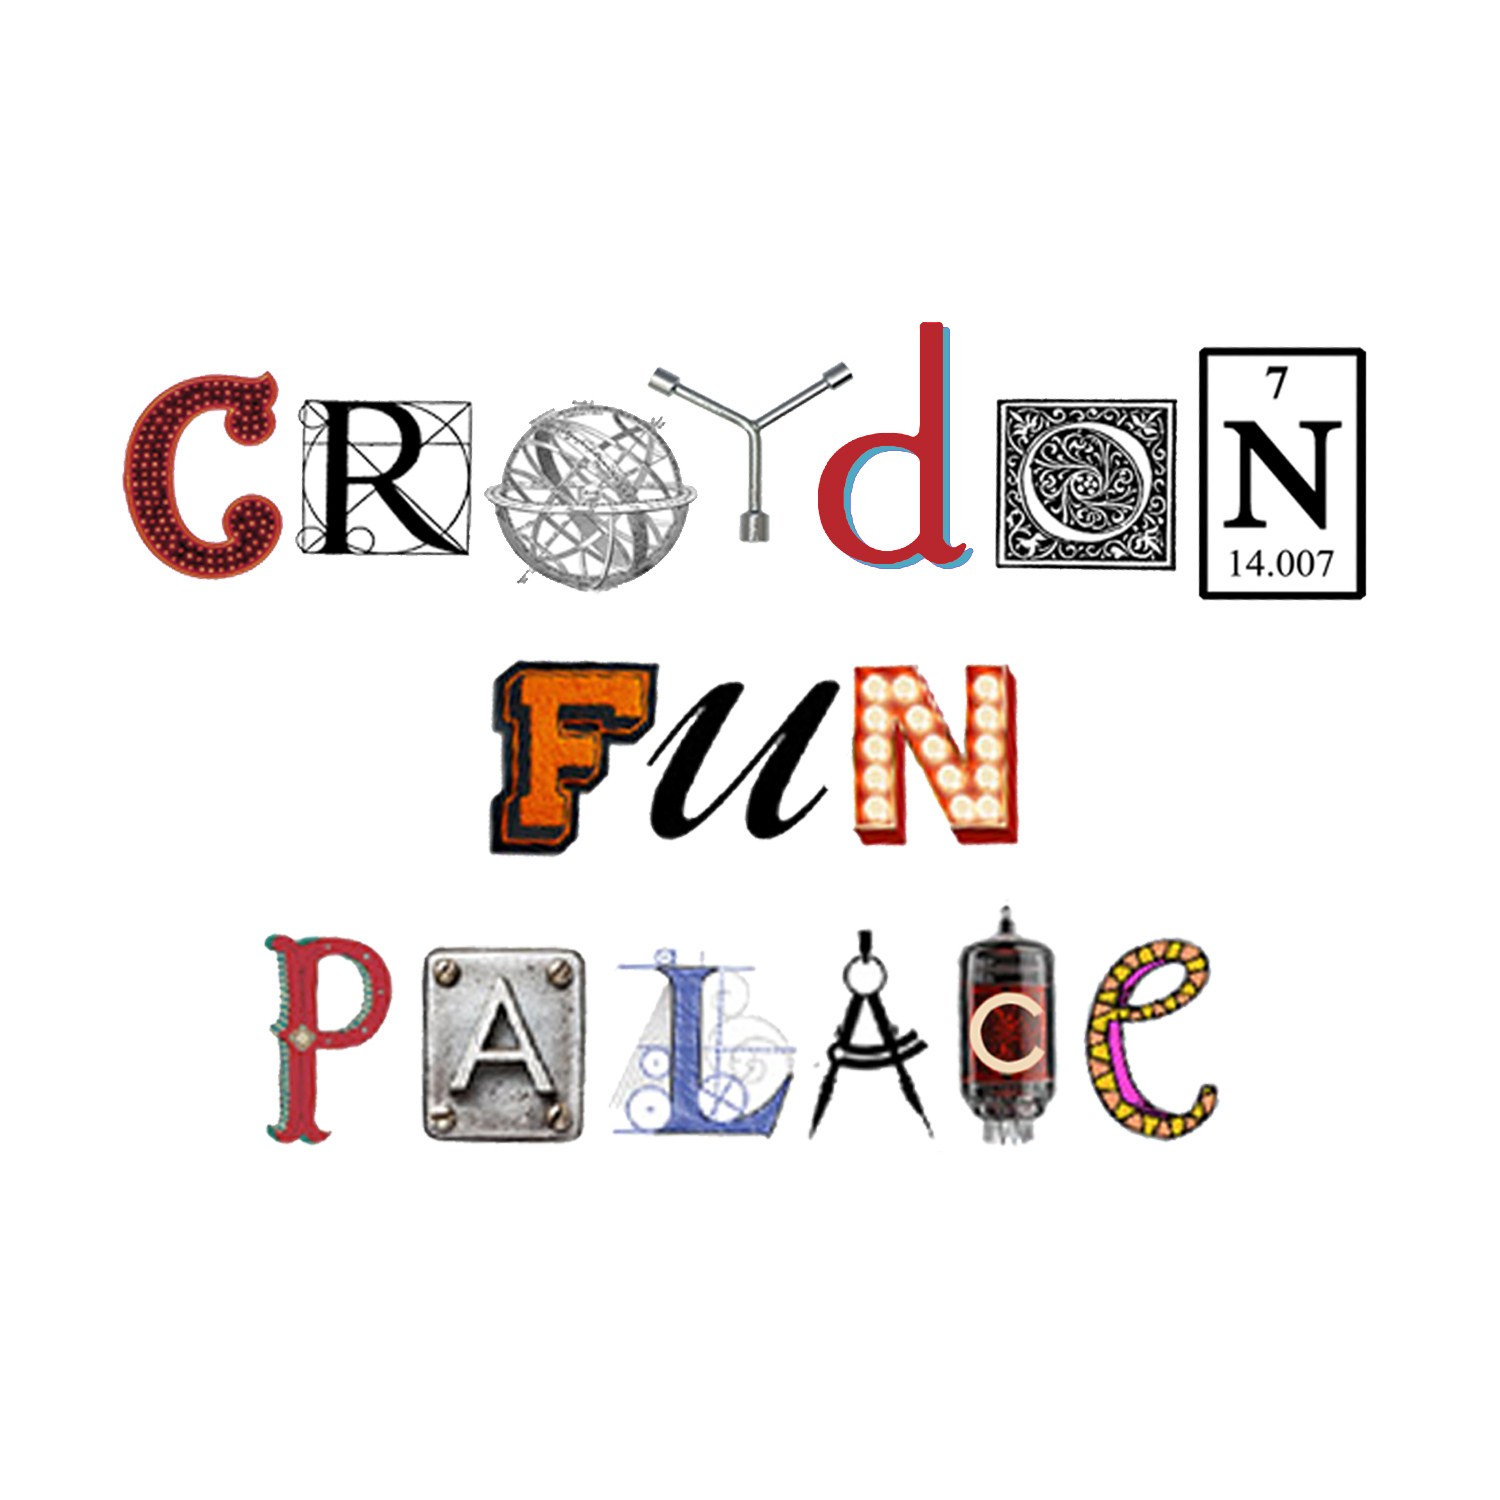 Croydon Fun Palace